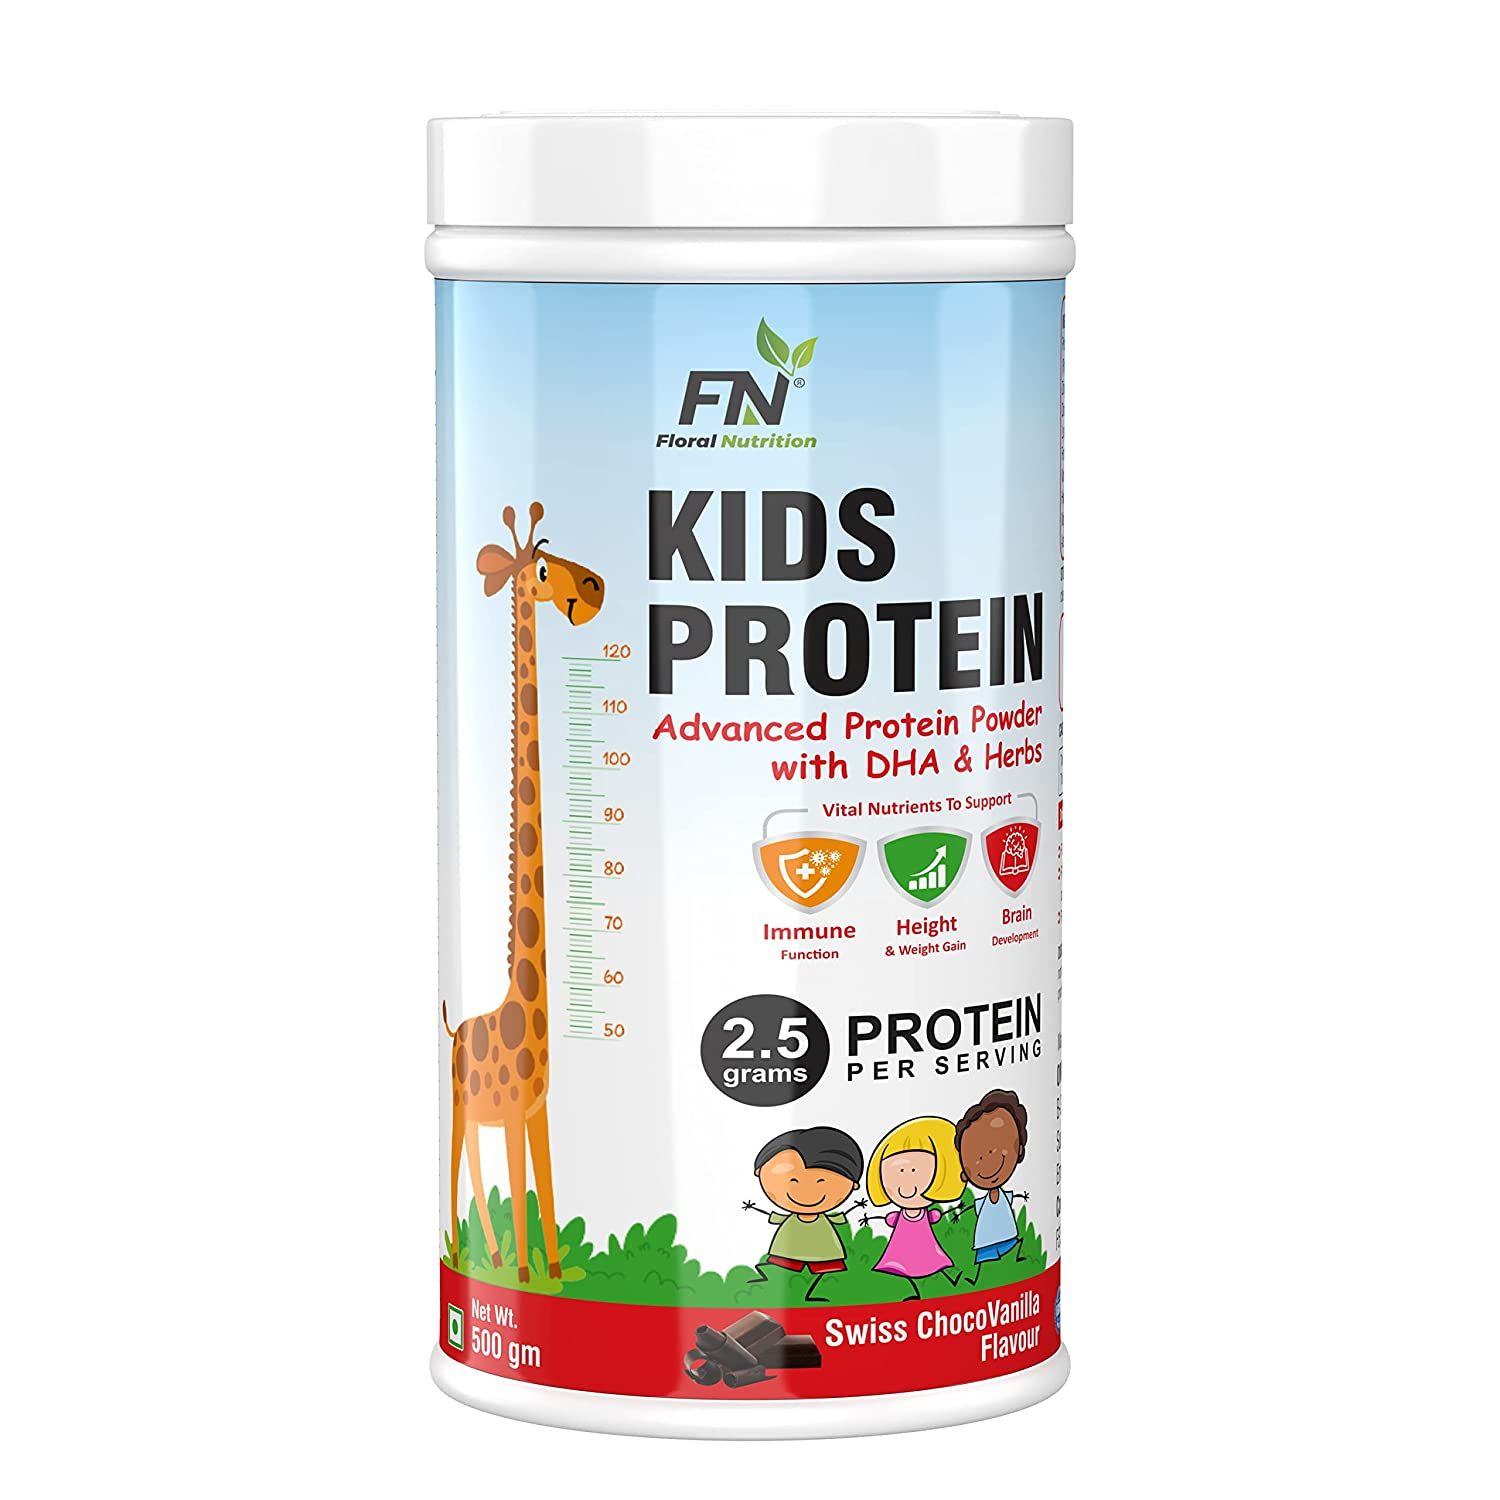 Floral Nutrition Kids Protein Powder Image